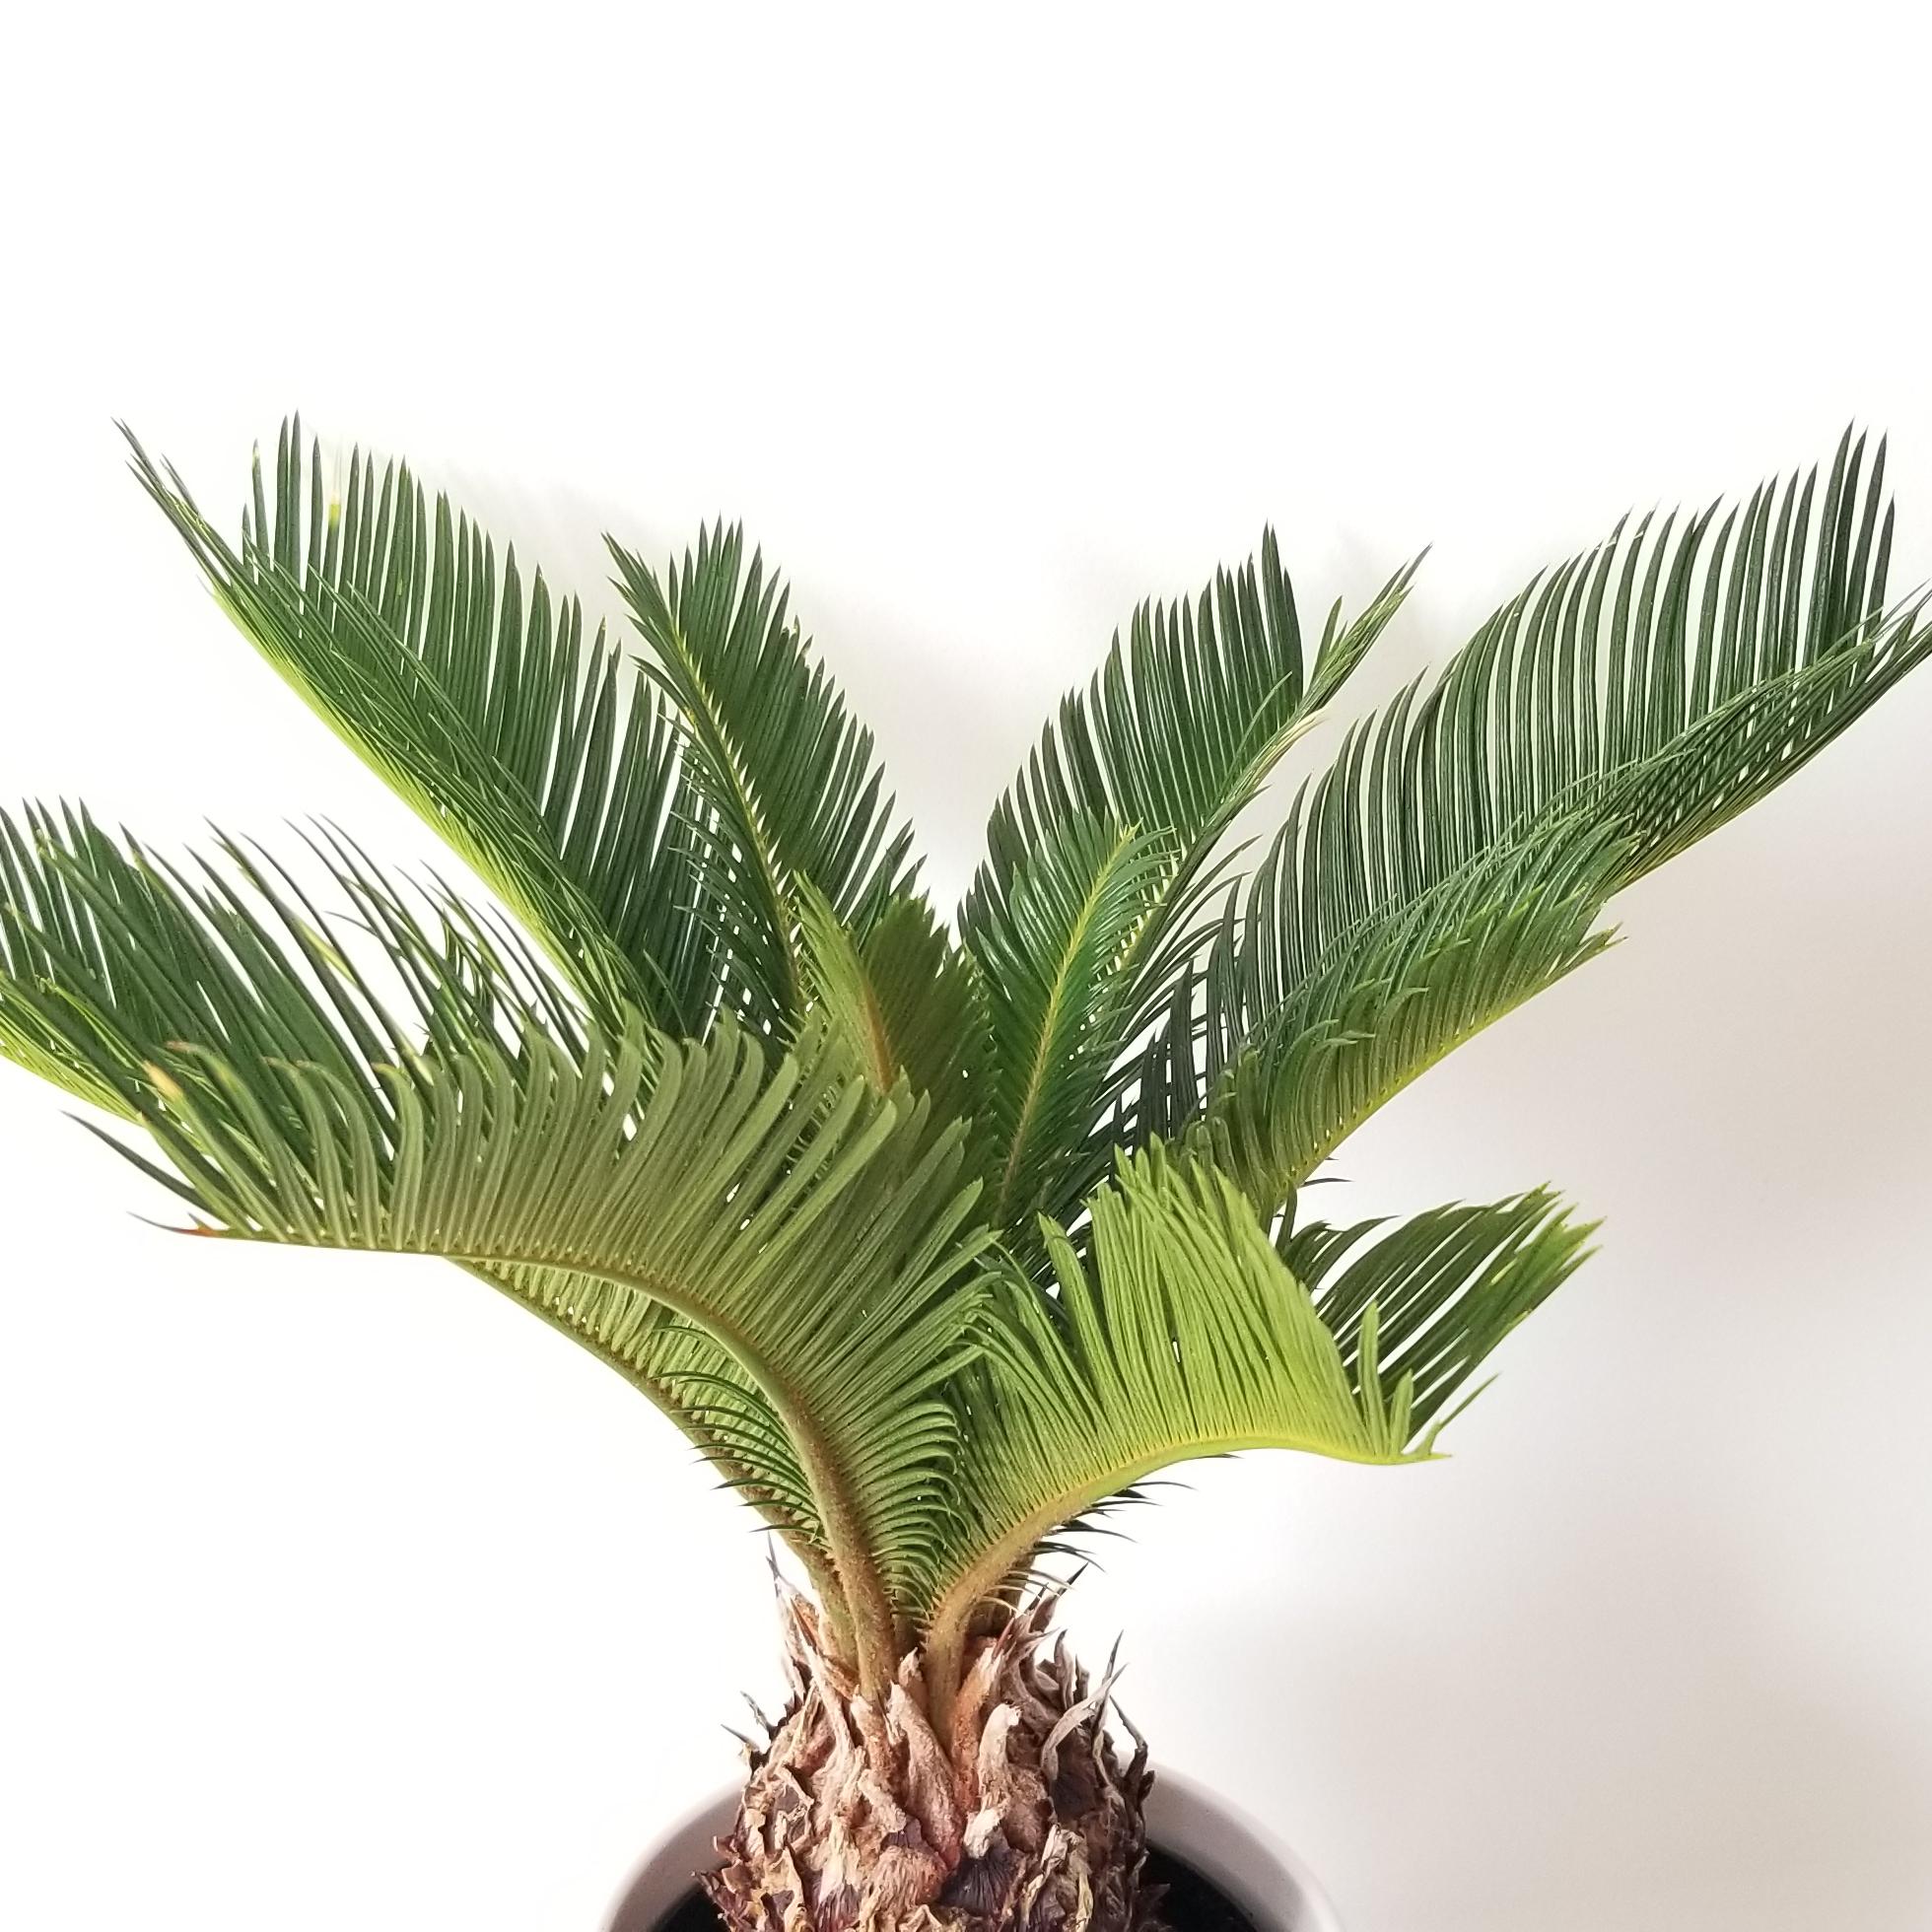 sago palm in decorative ceramic container Christmas plant gift Indoor plants office plants houseplants Toronto Mississauga Etobicoke Burlington Oakville